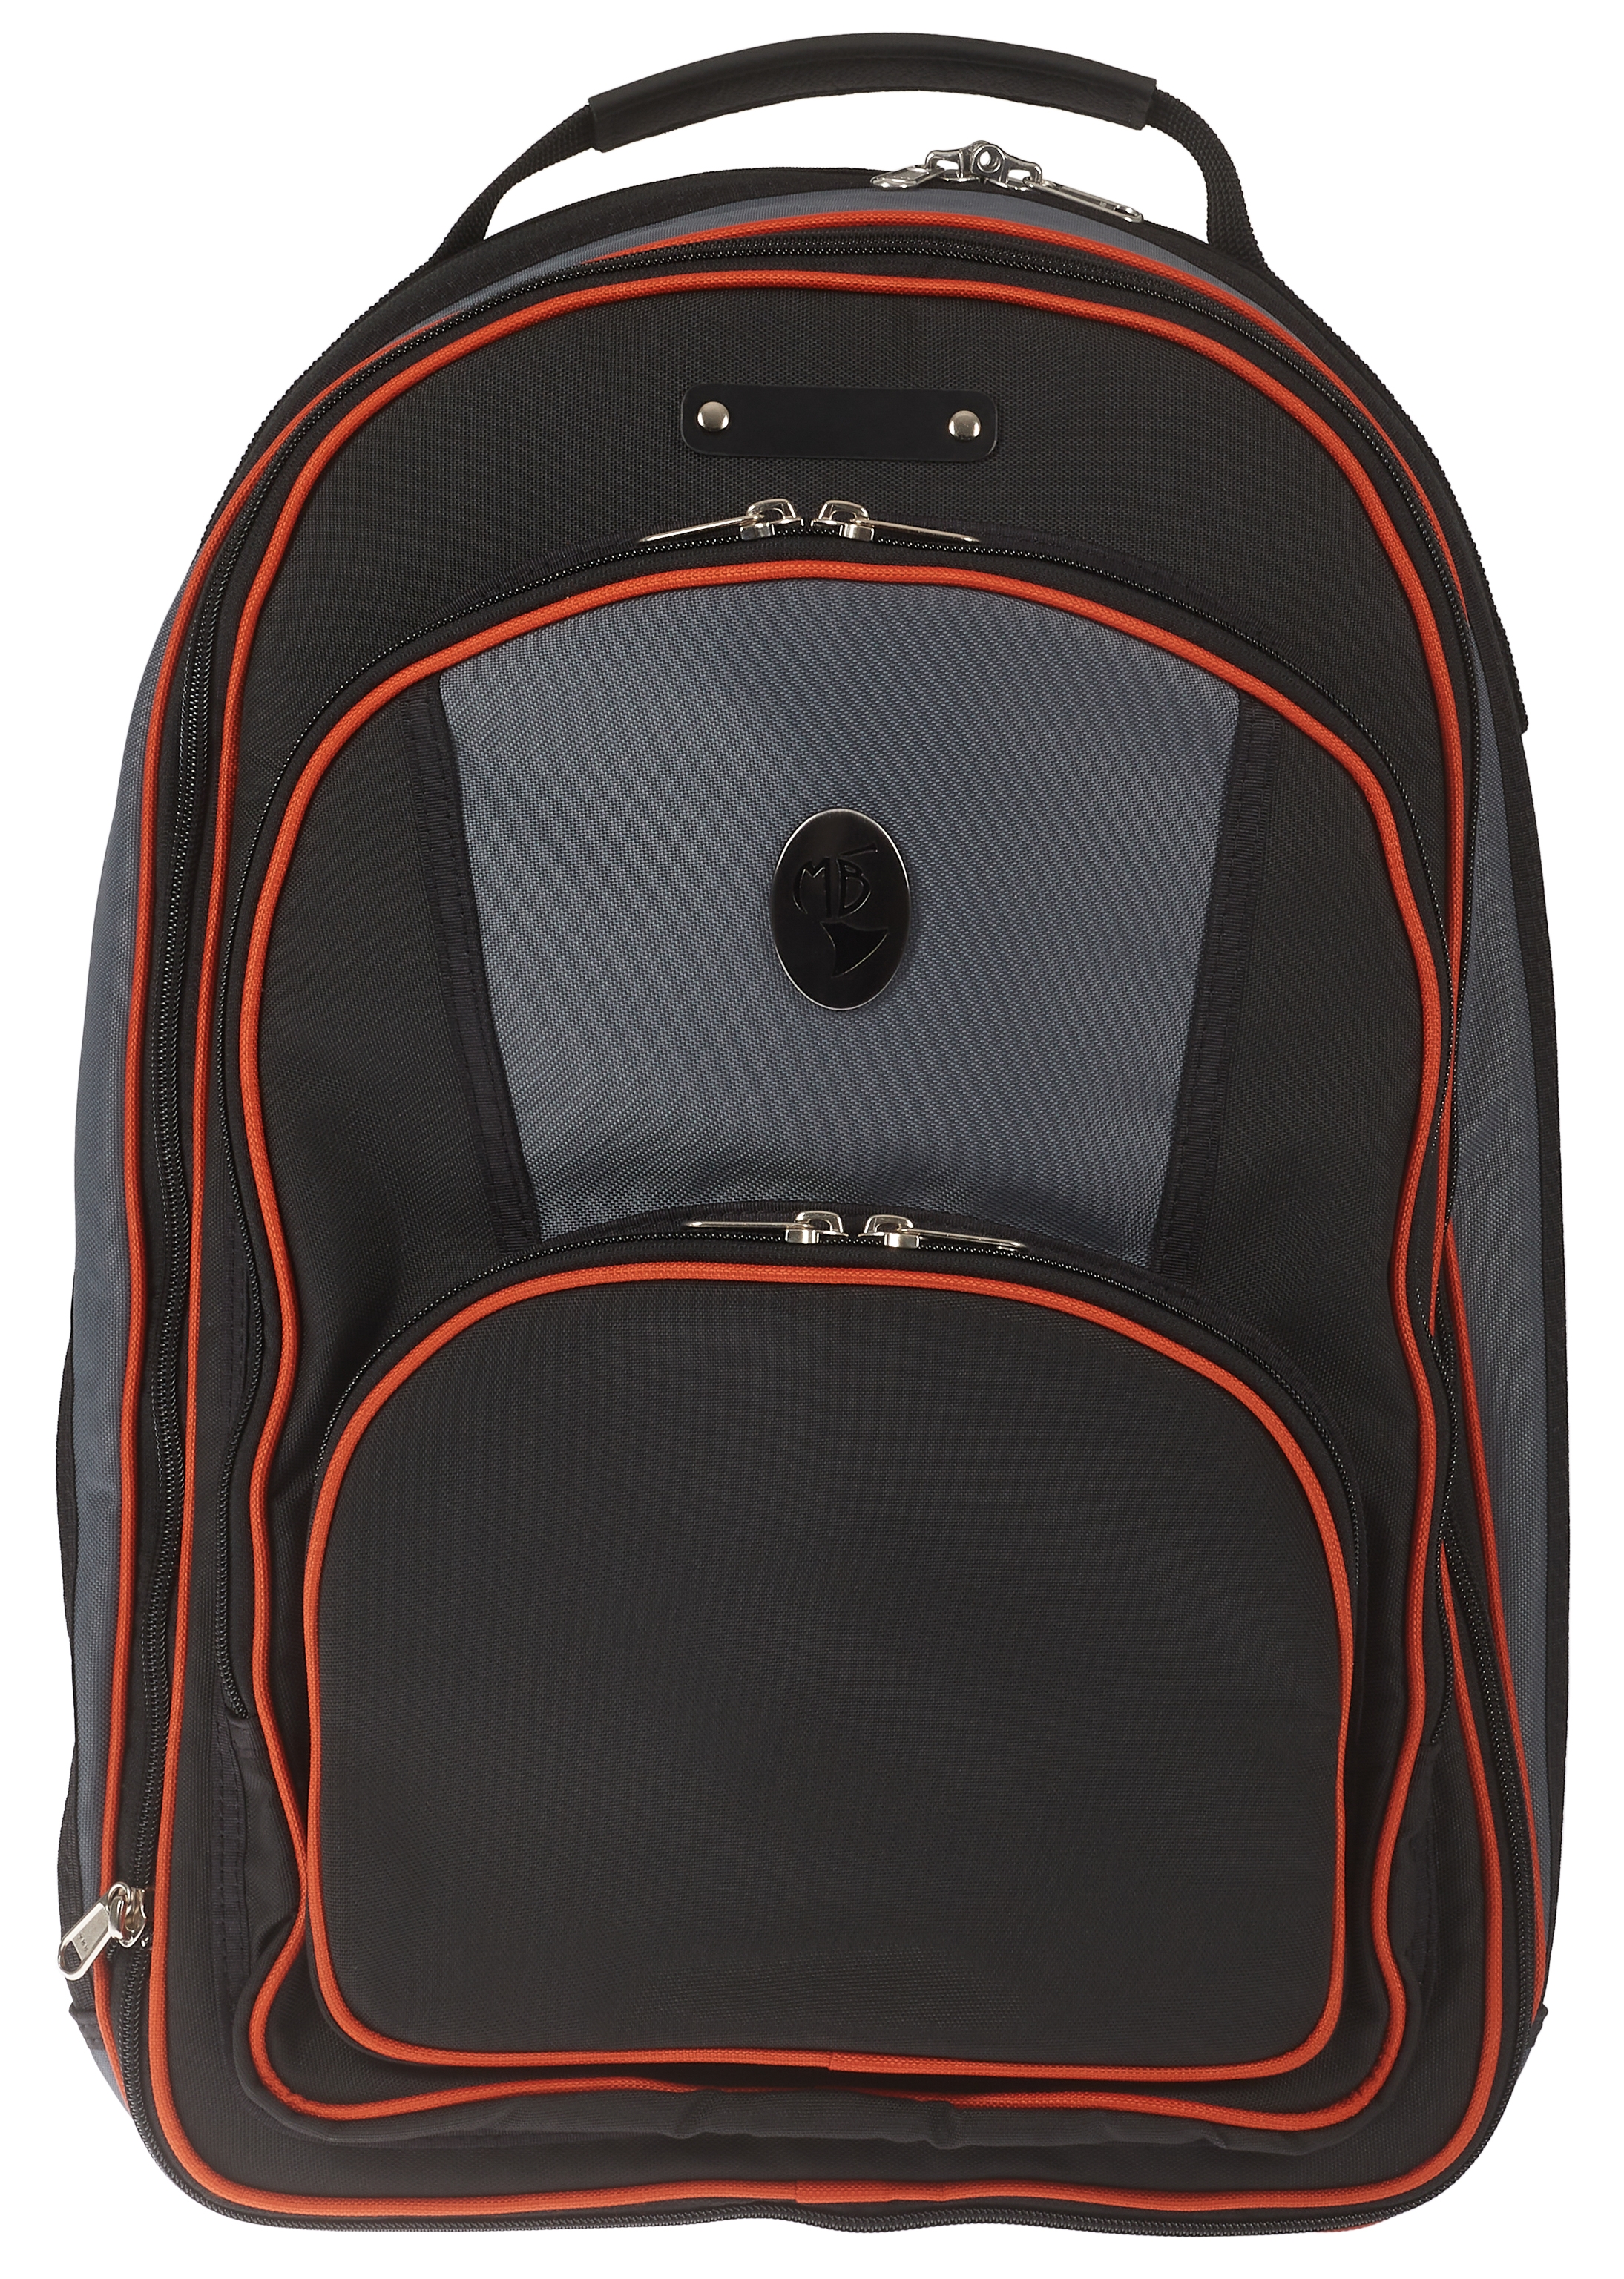 MARCUS BONNA MB Backpack Bag, Black/Grey Nylon, Orange Piping, Bell Protector  | Obrázok 1 | eplay.sk